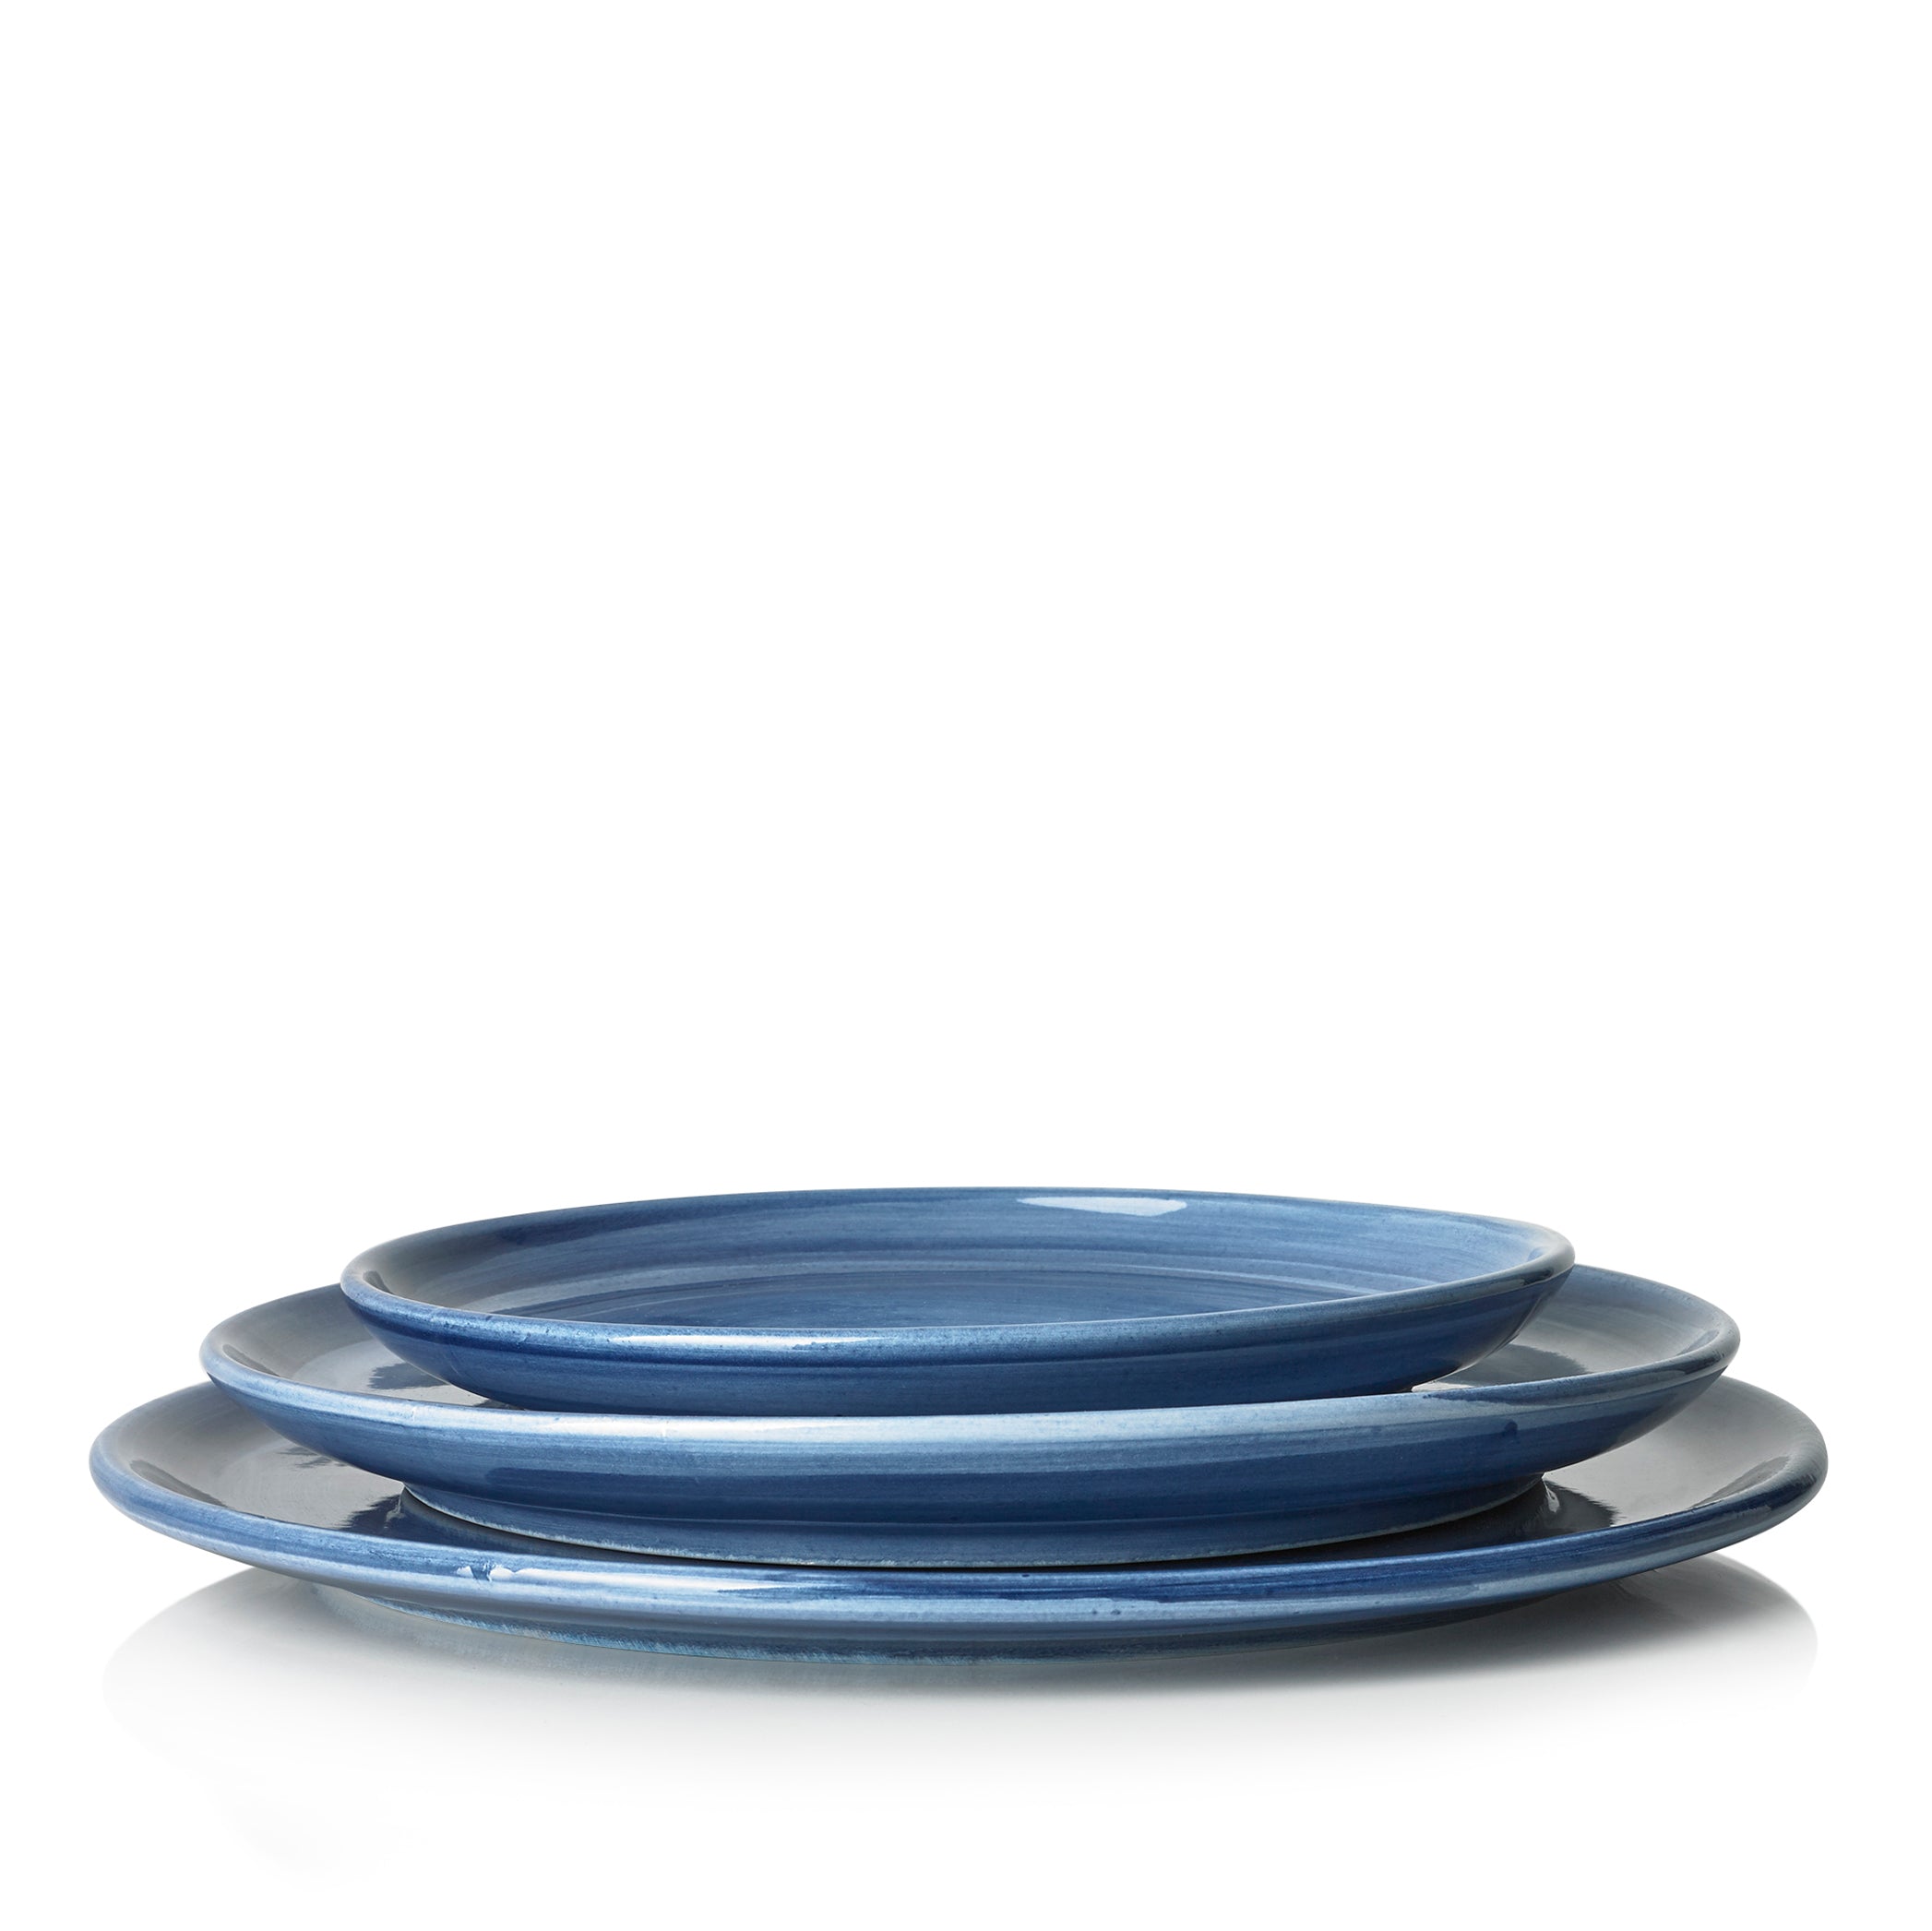 S&B "La Couronne" 29cm Ceramic Tart / Cake Plate in Blue